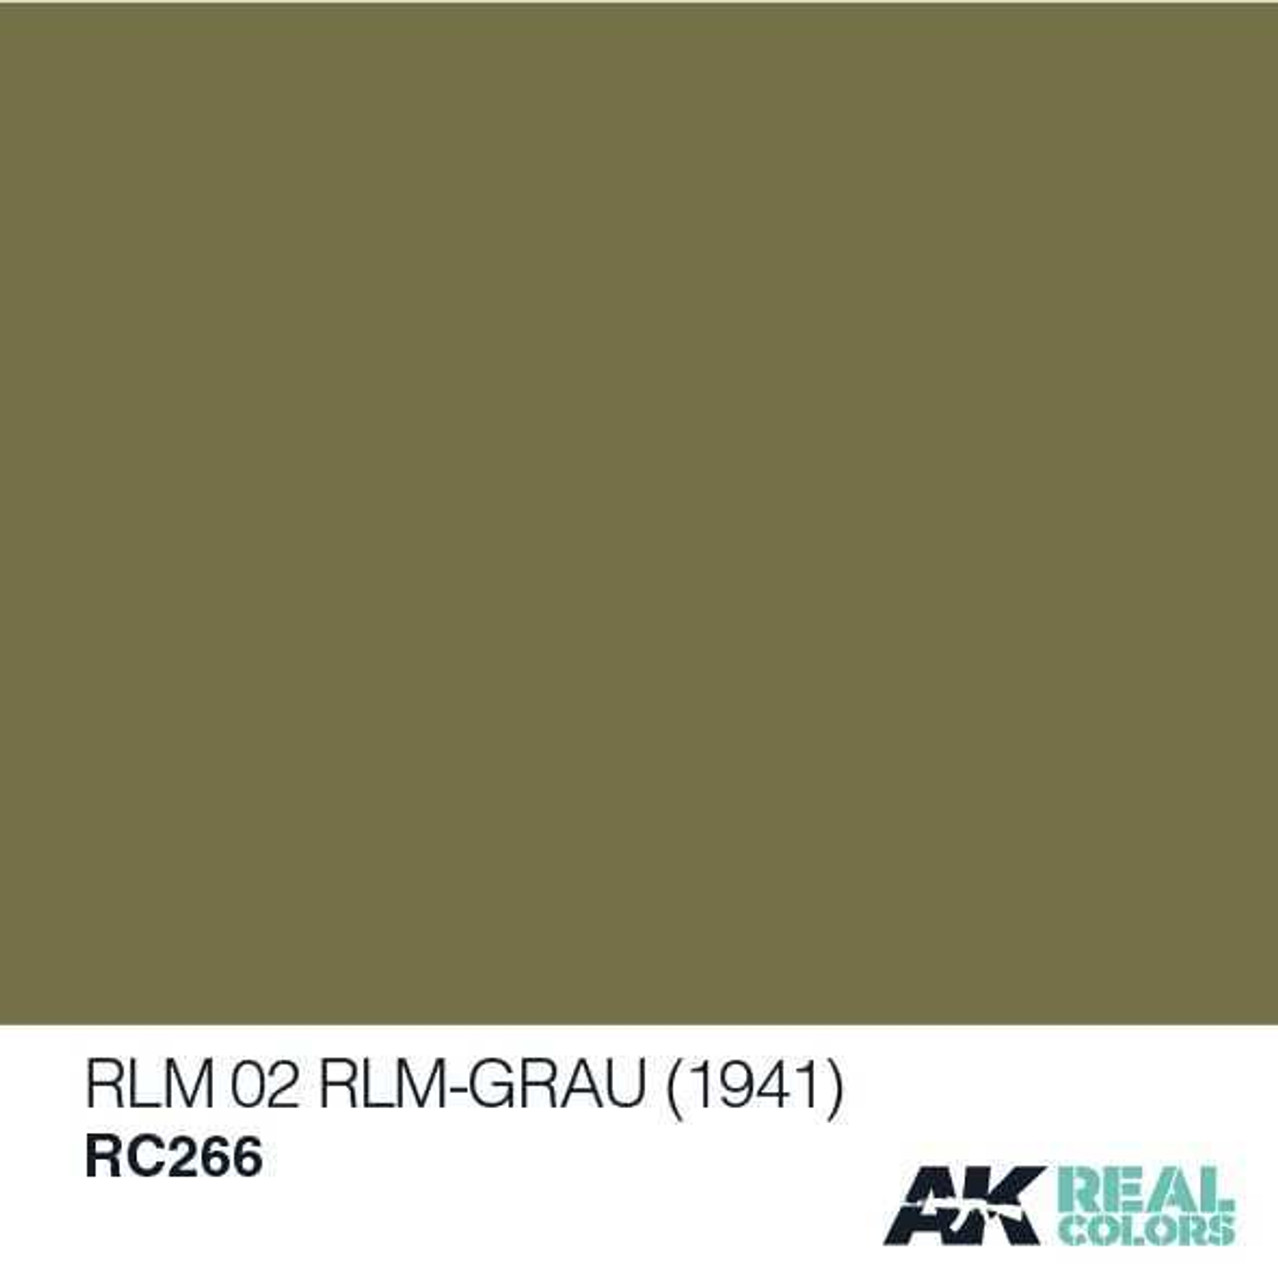 AKIRC266 Real Colors  RLM02 RLM-Grau (1941) Acrylic Lacquer Paint 10ml Bottle